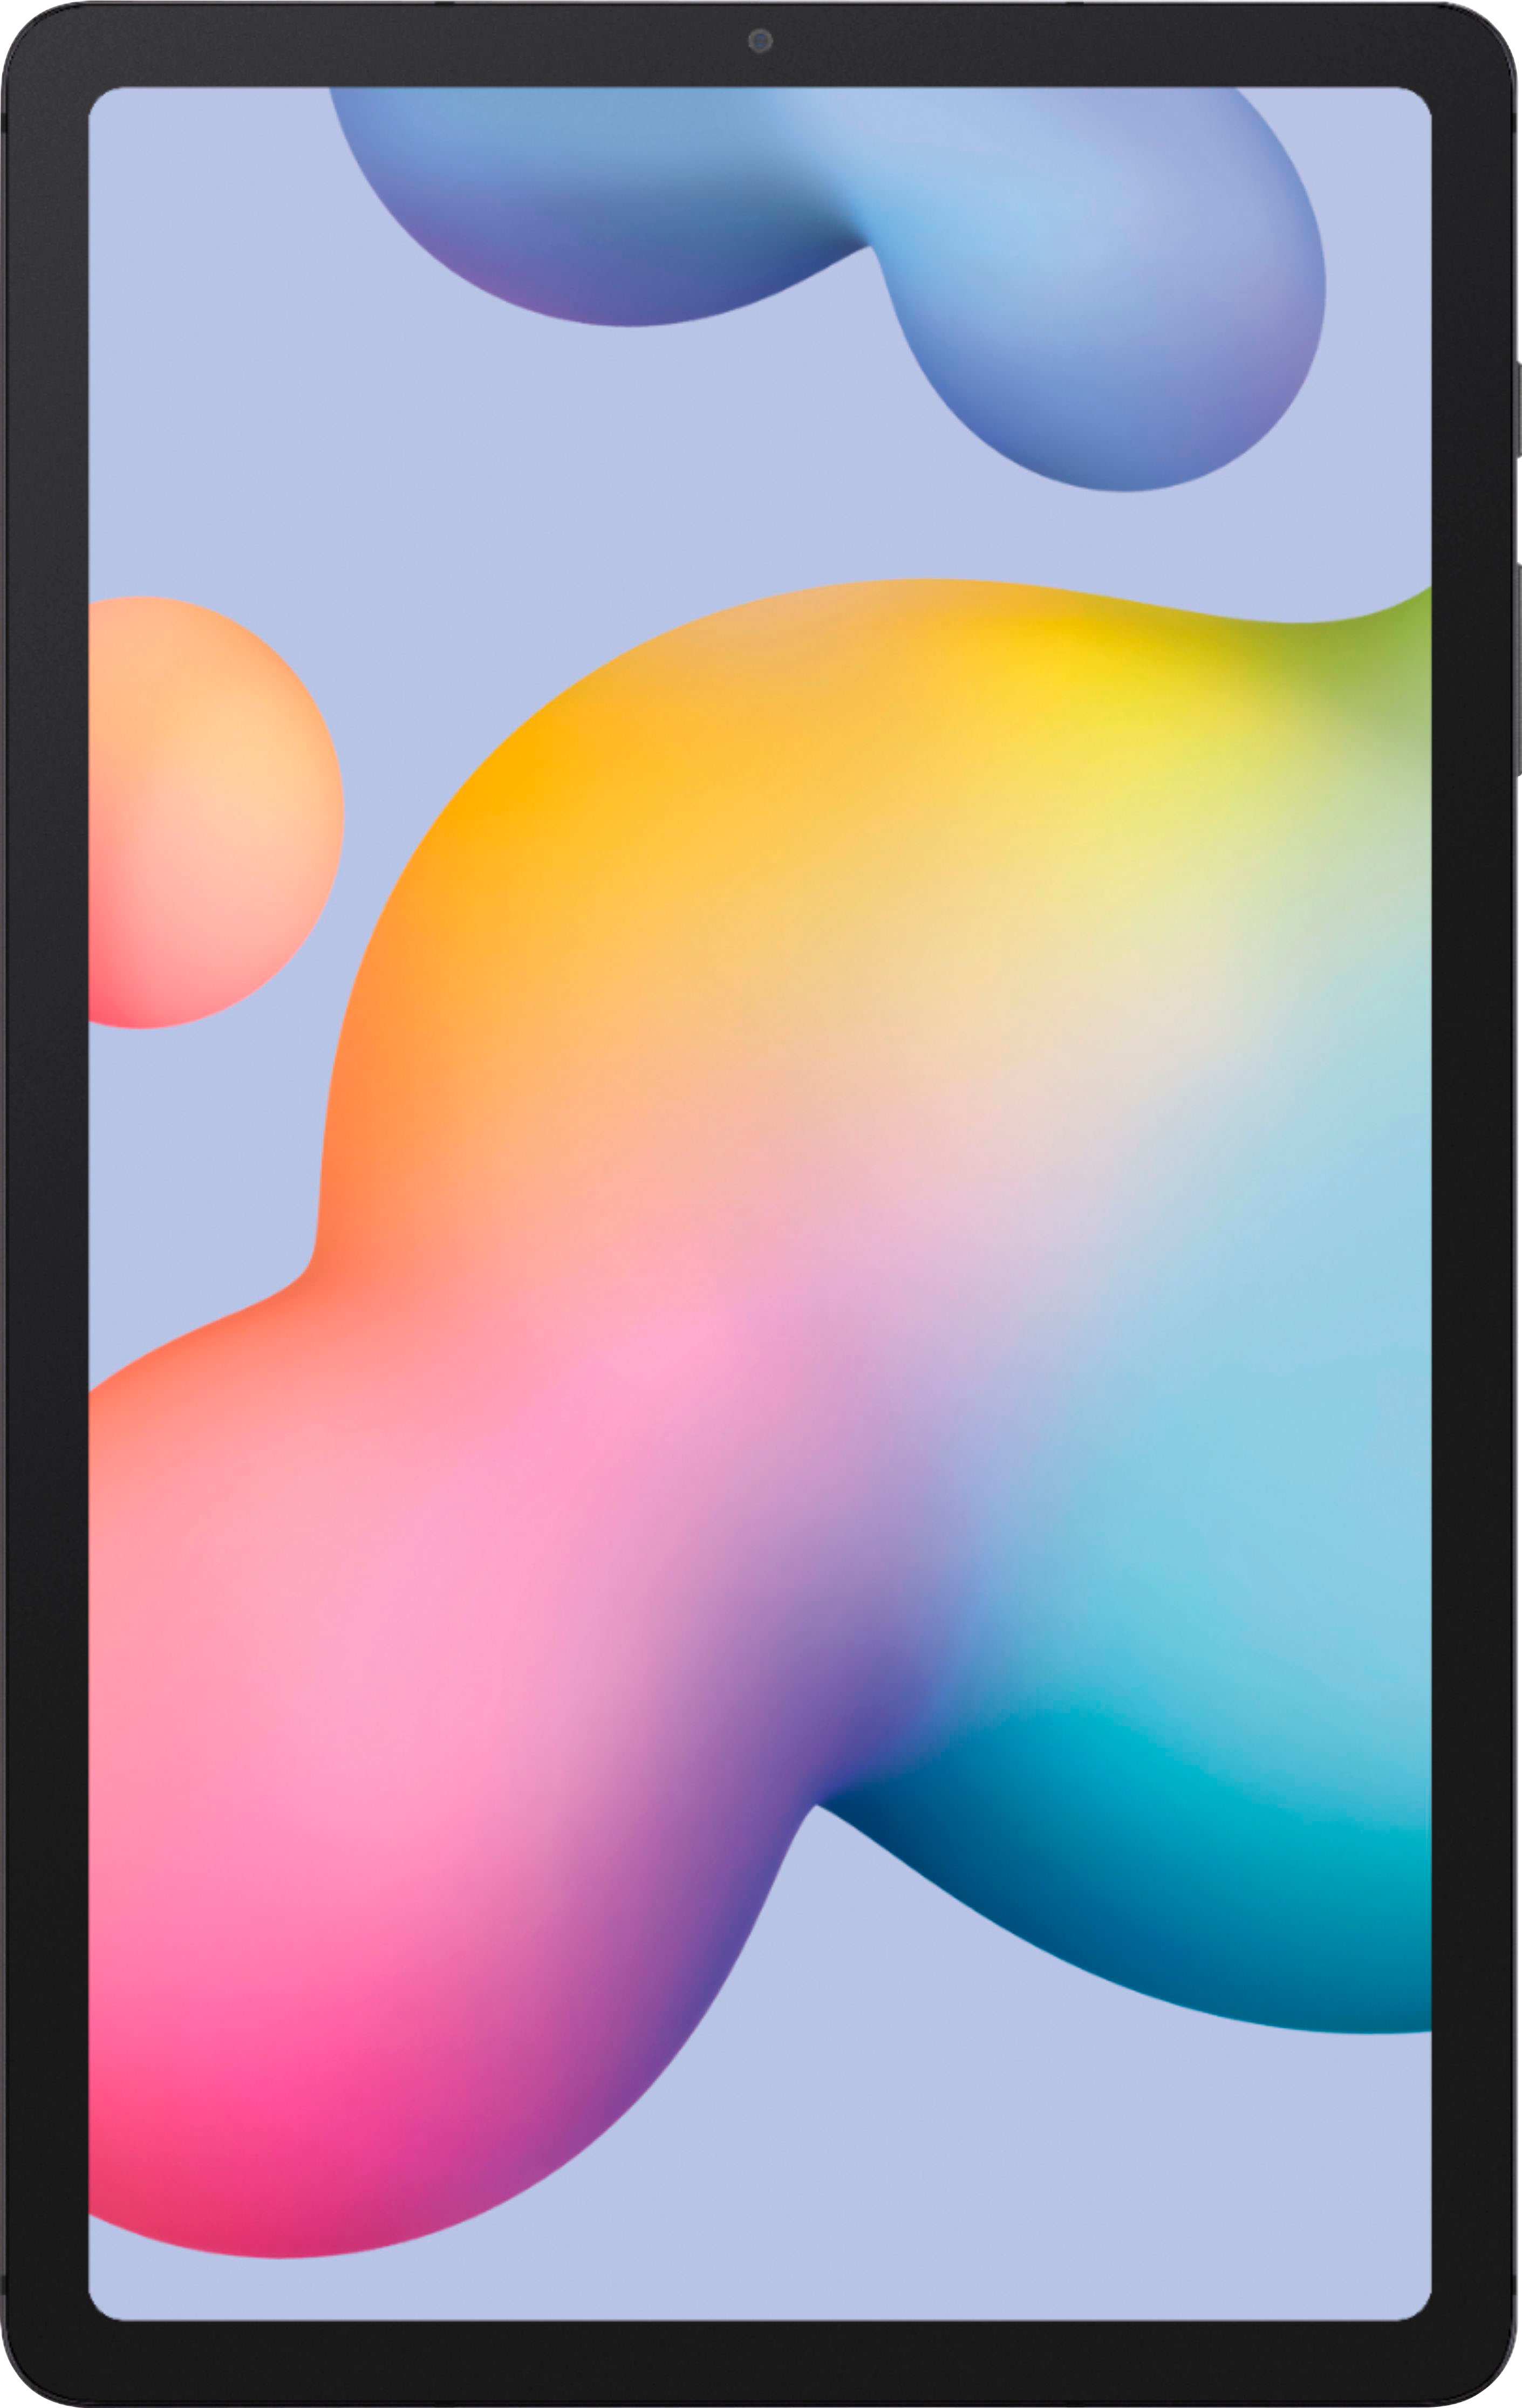 Angle View: Samsung - Geek Squad Certified Refurbished Galaxy Tab S6 Lite - 10.4" - 64GB - Oxford Gray